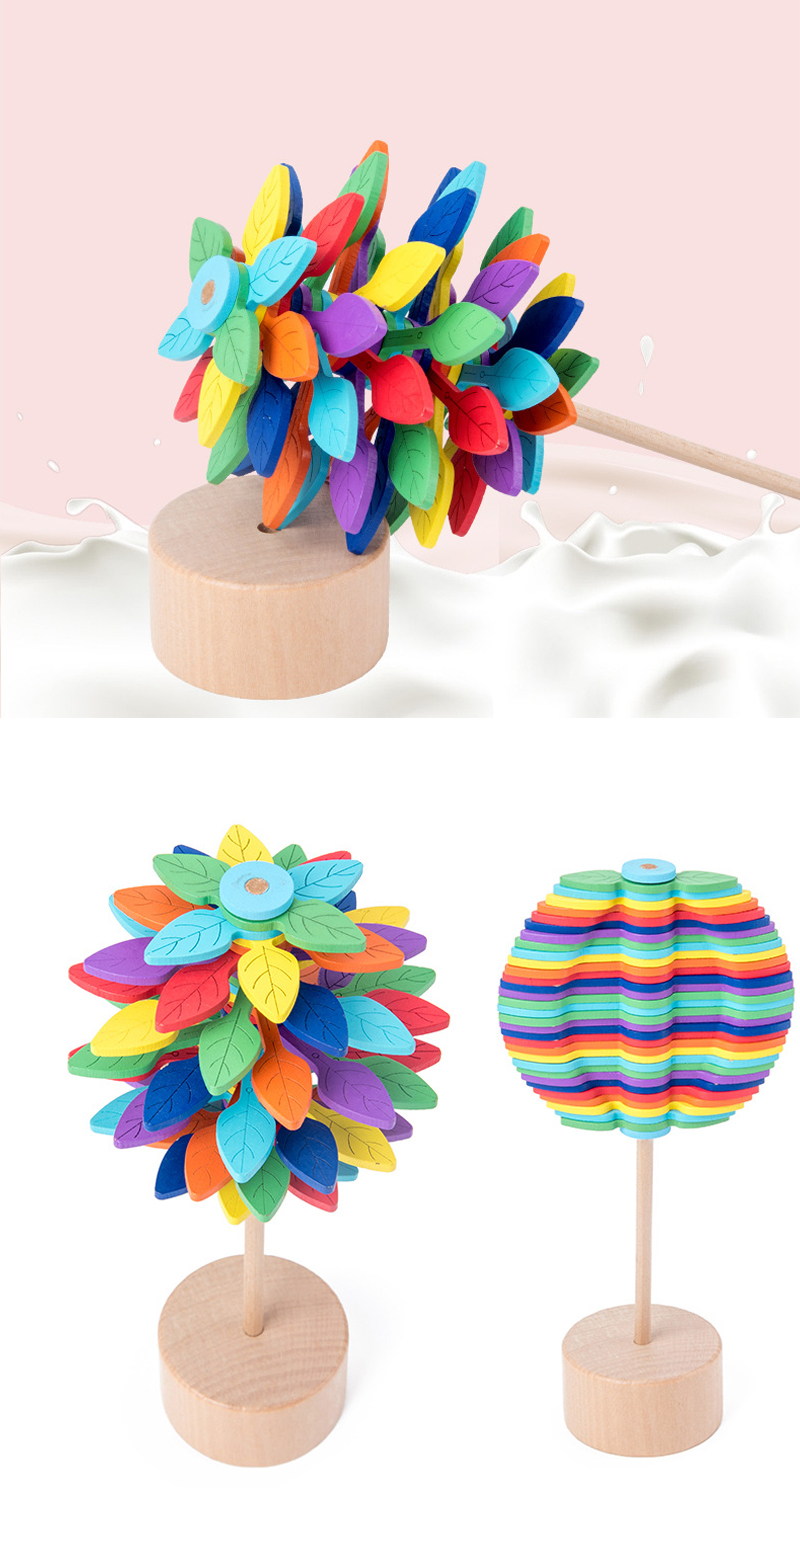 Rotating-Lollipop-Fahrenheit-Series-Creative-Decoration-Decompression-Toy-Bar-Stress-Relief-Toy-Upgr-1546025-3